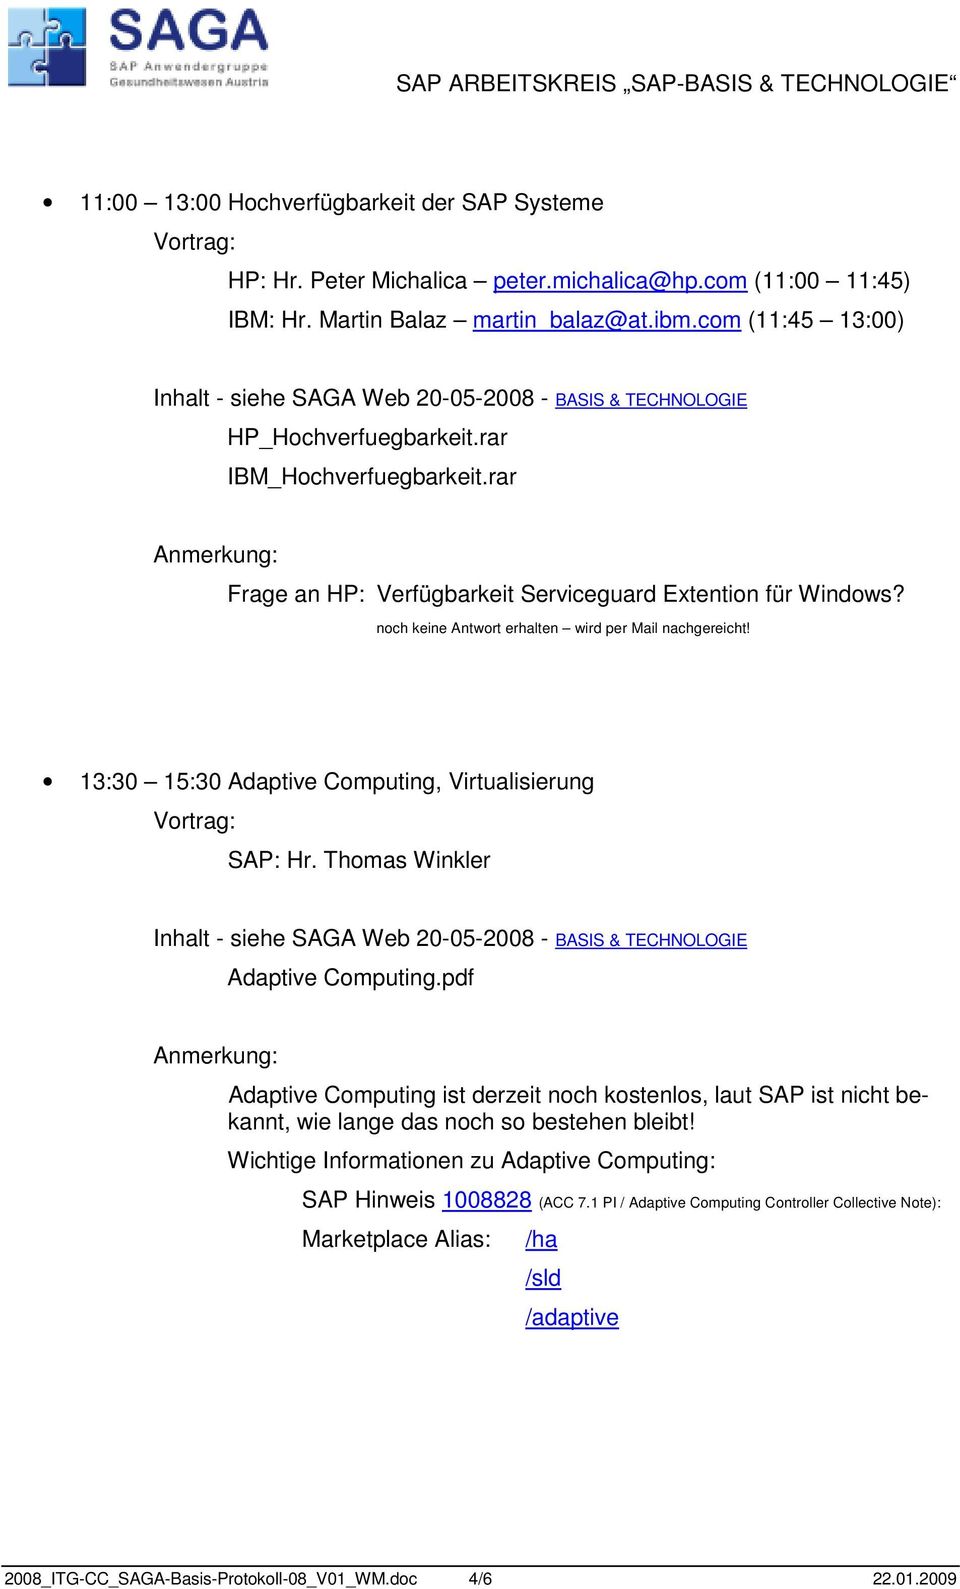 13:30 15:30 Adaptive Computing, Virtualisierung SAP: Hr. Thomas Winkler Adaptive Computing.